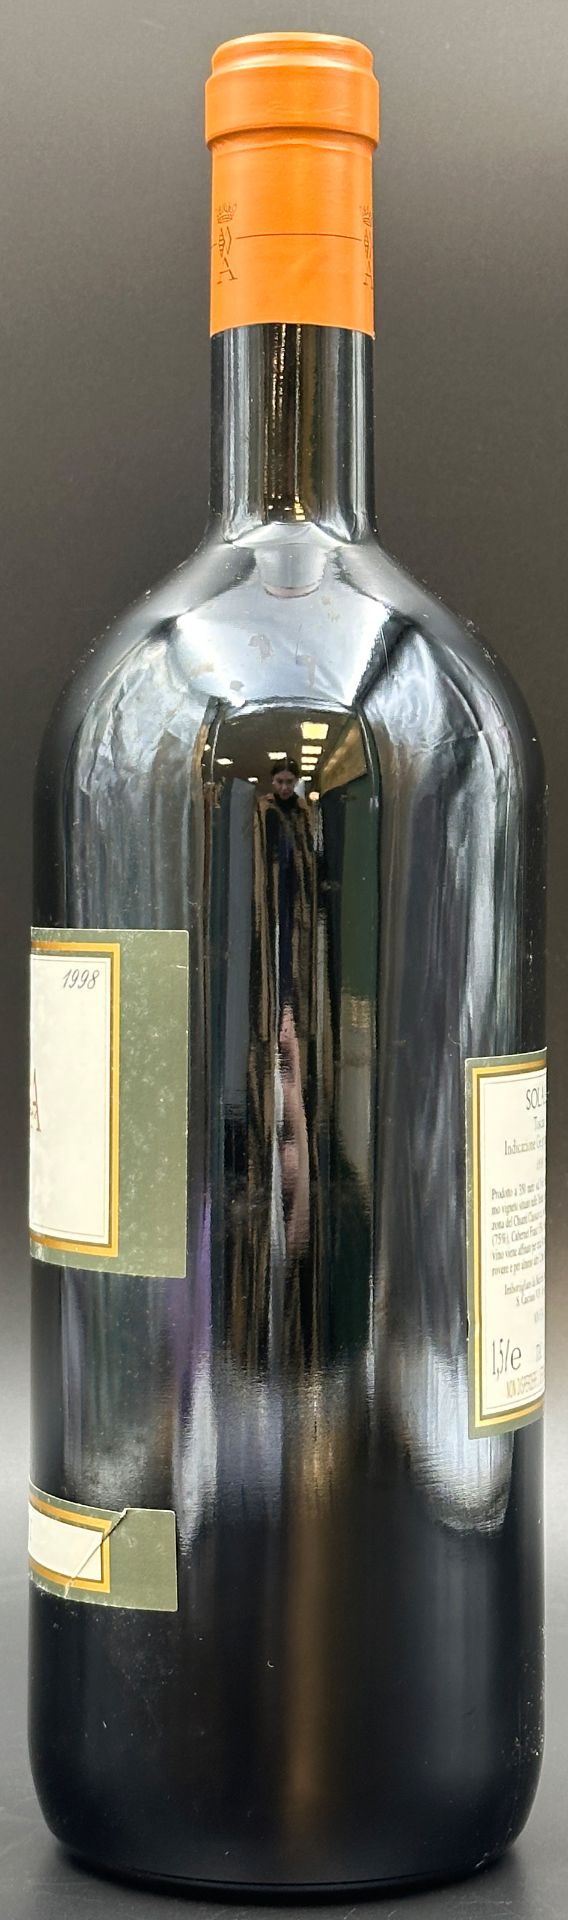 SOLAIA. Marchesi Antinori. 1 magnum bottle of red wine. 1998. - Image 3 of 11